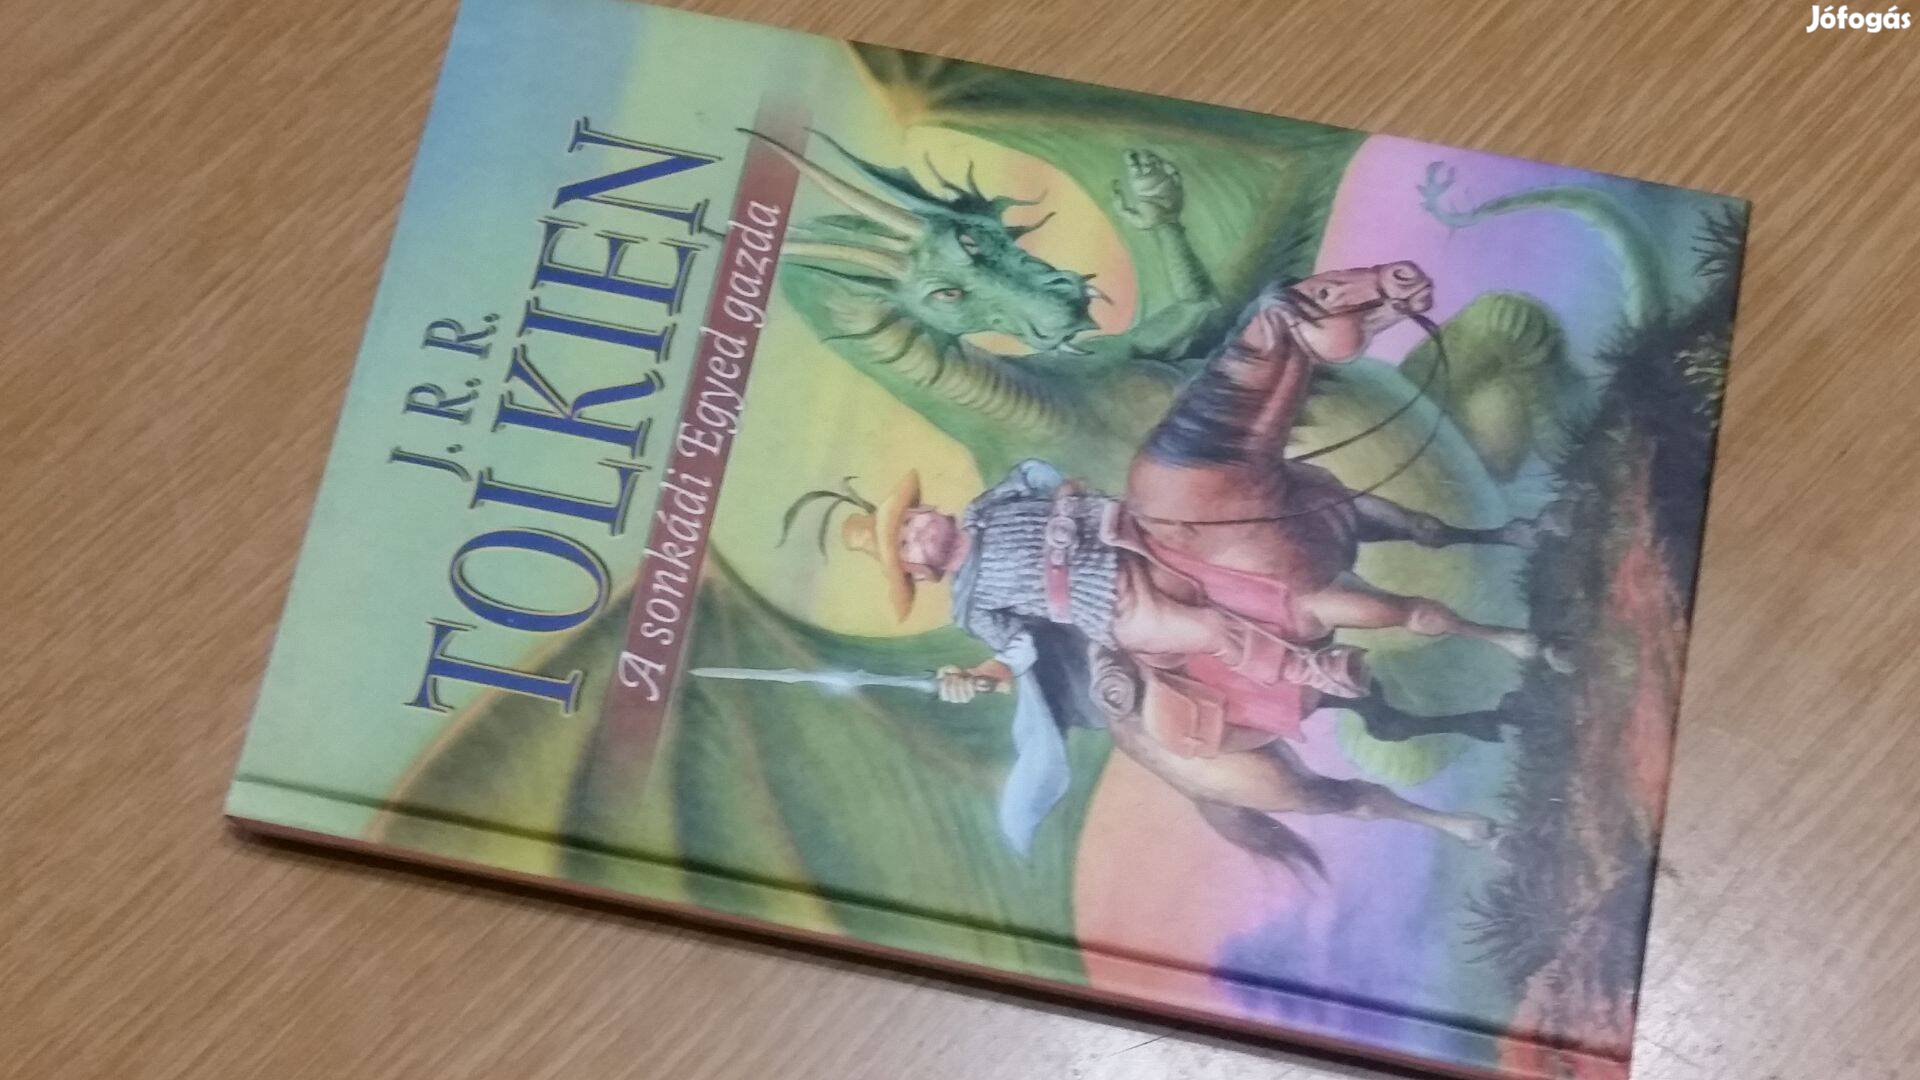 J. R. R. Tolkien: A sonkádi Egyed gazda